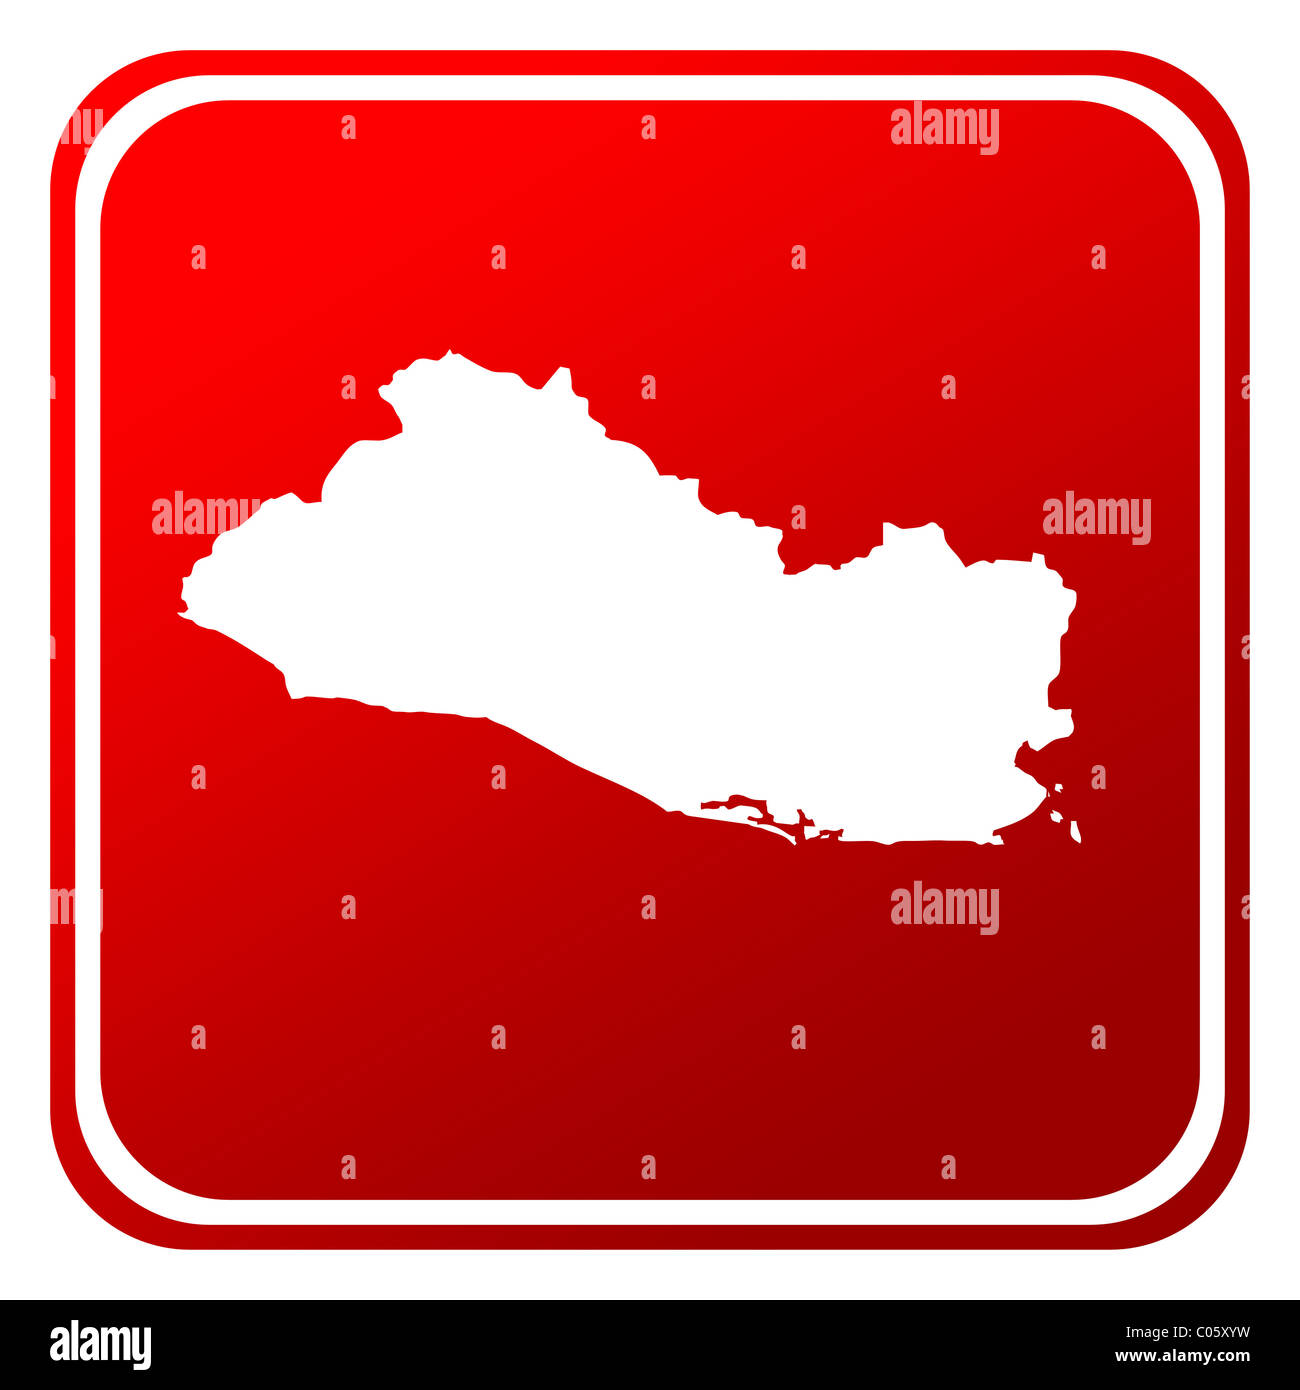 El Salvador rosso pulsante mappa isolati su sfondo bianco. Foto Stock